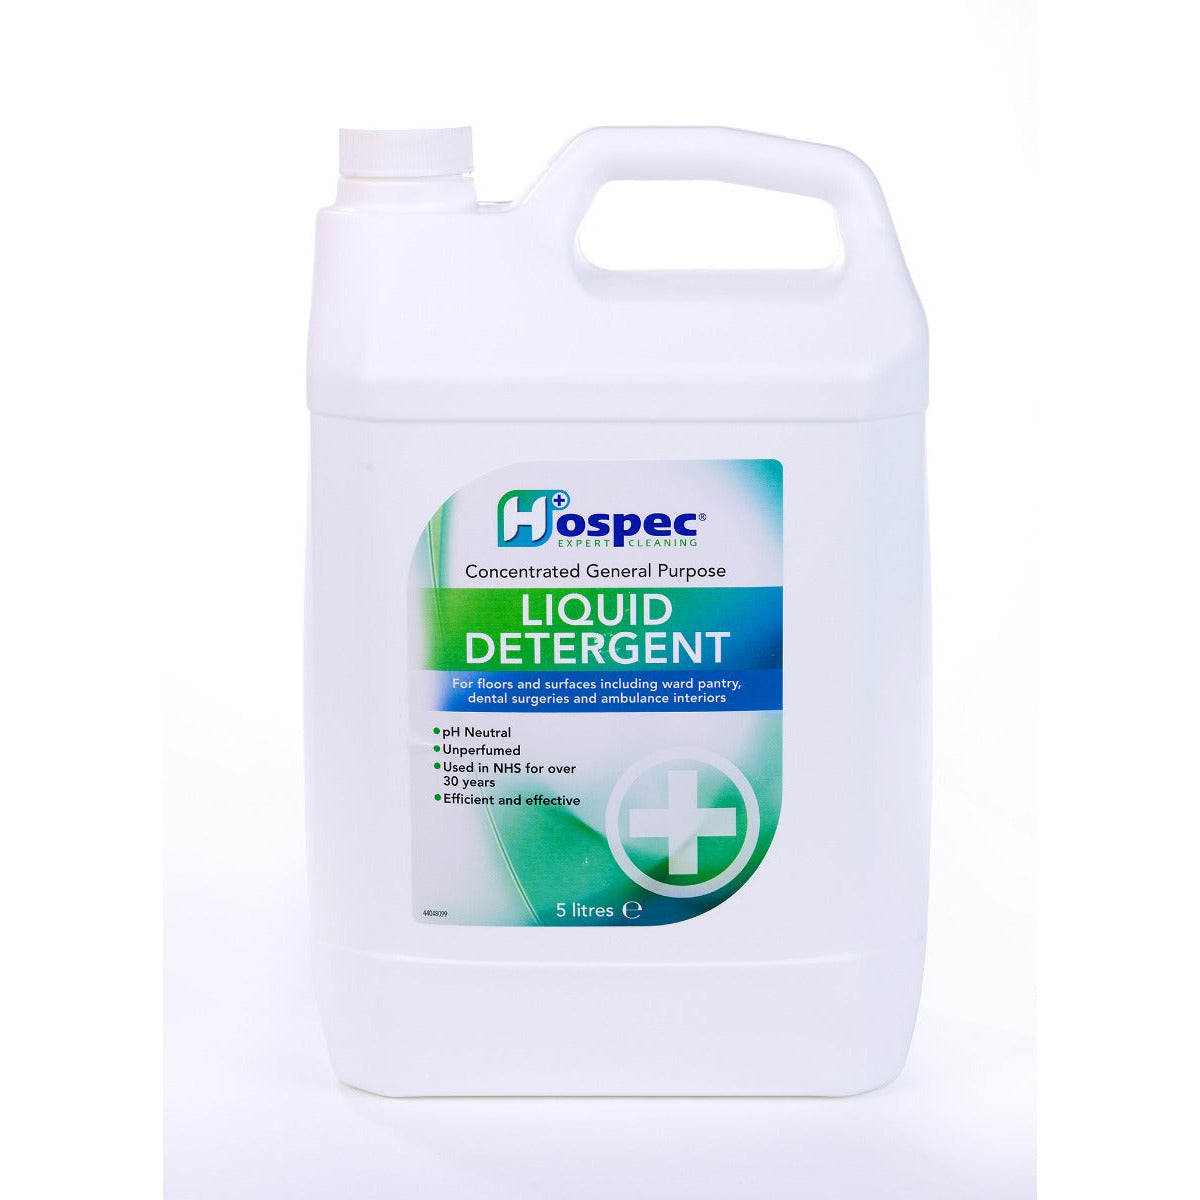 Hospec Liquid Detergent 5 Litre - pH Neutral x 1